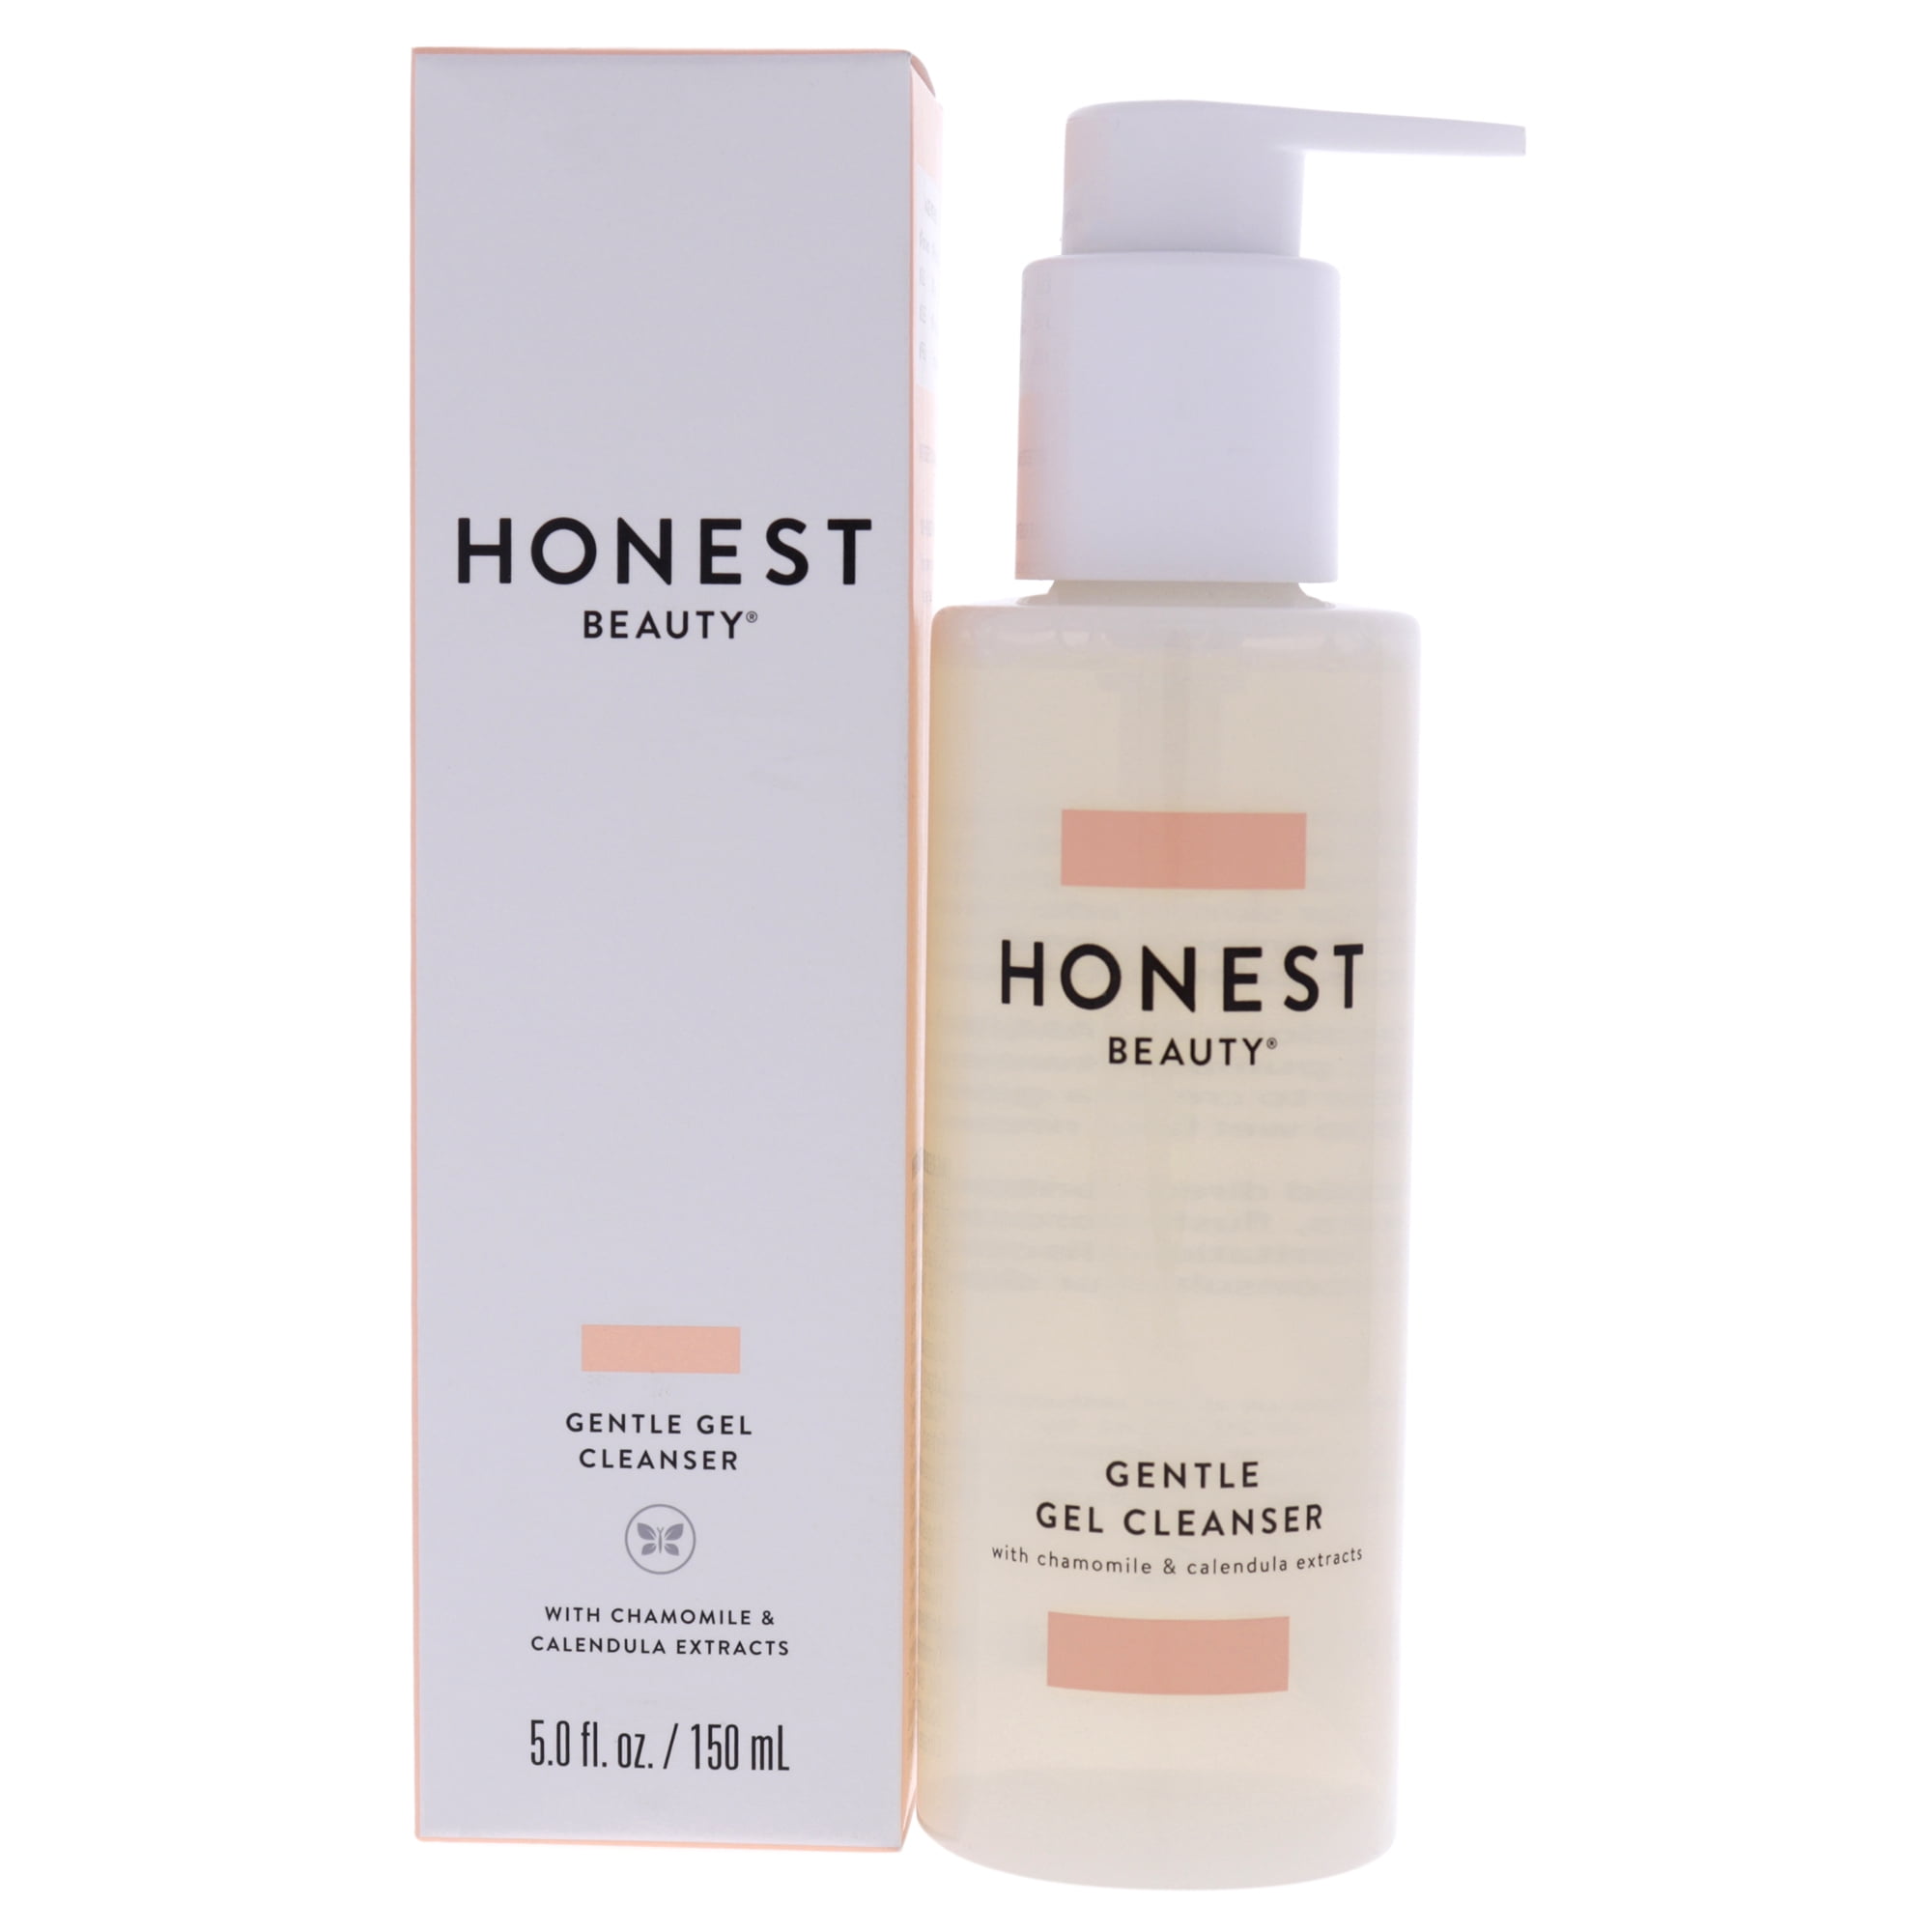 Gentle Gel Cleanser by Honest for Women - 5 oz Cleanser 